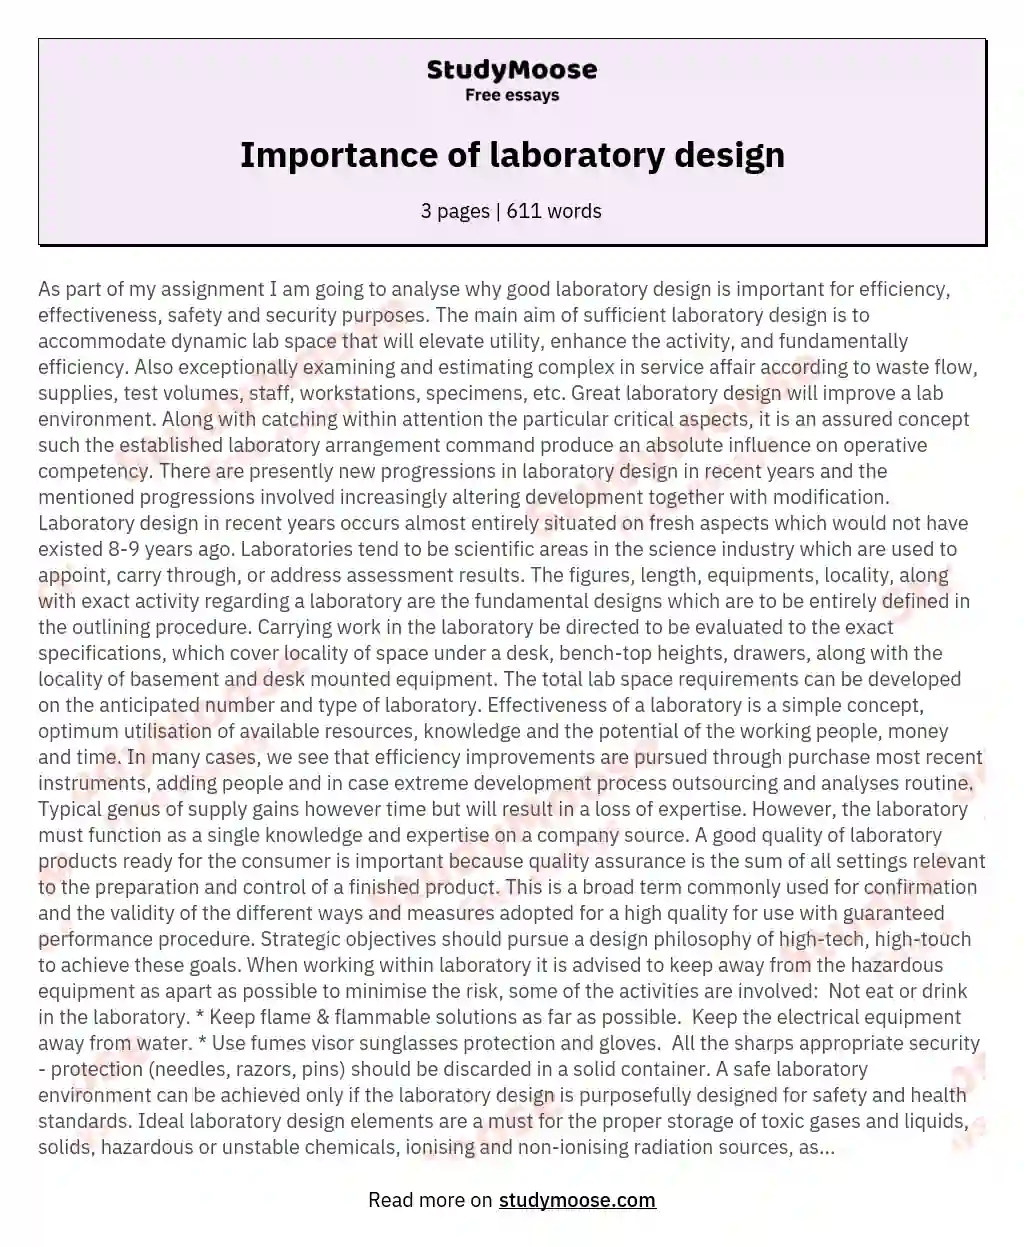 Importance of laboratory design essay